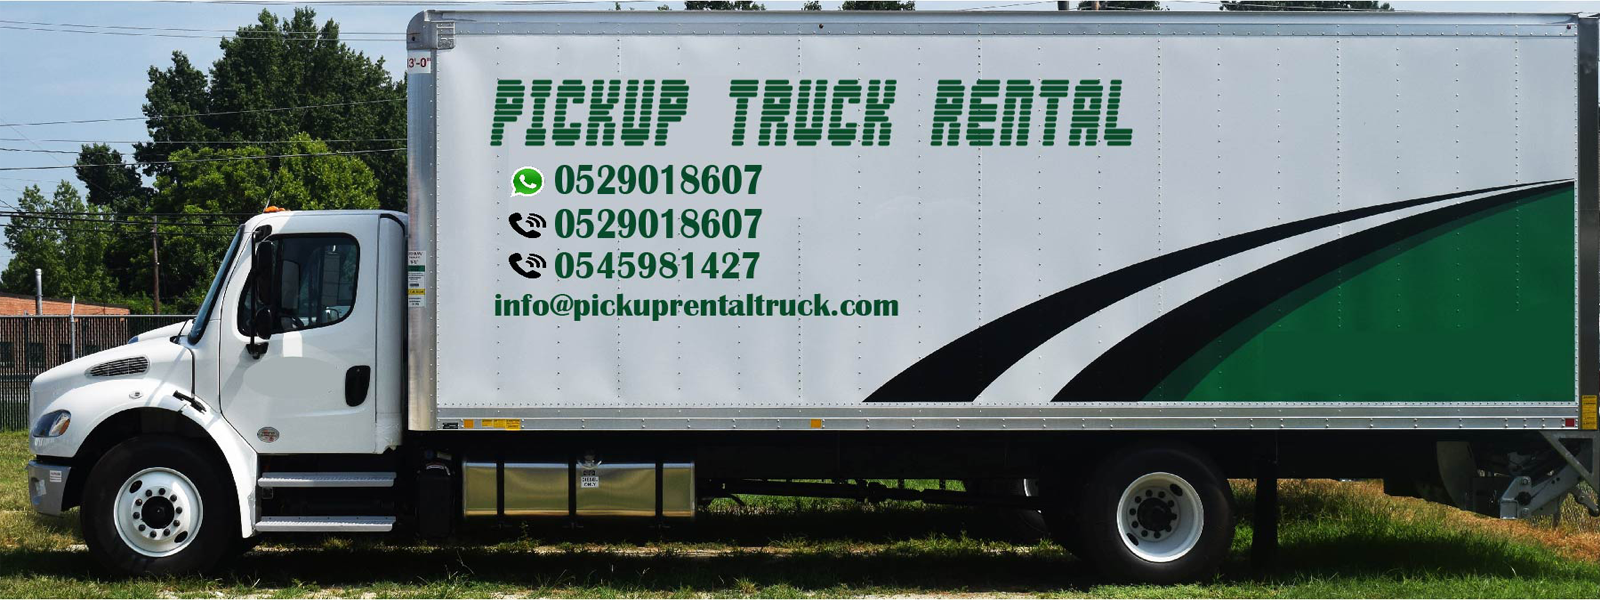 Pickup truck rental in dubai